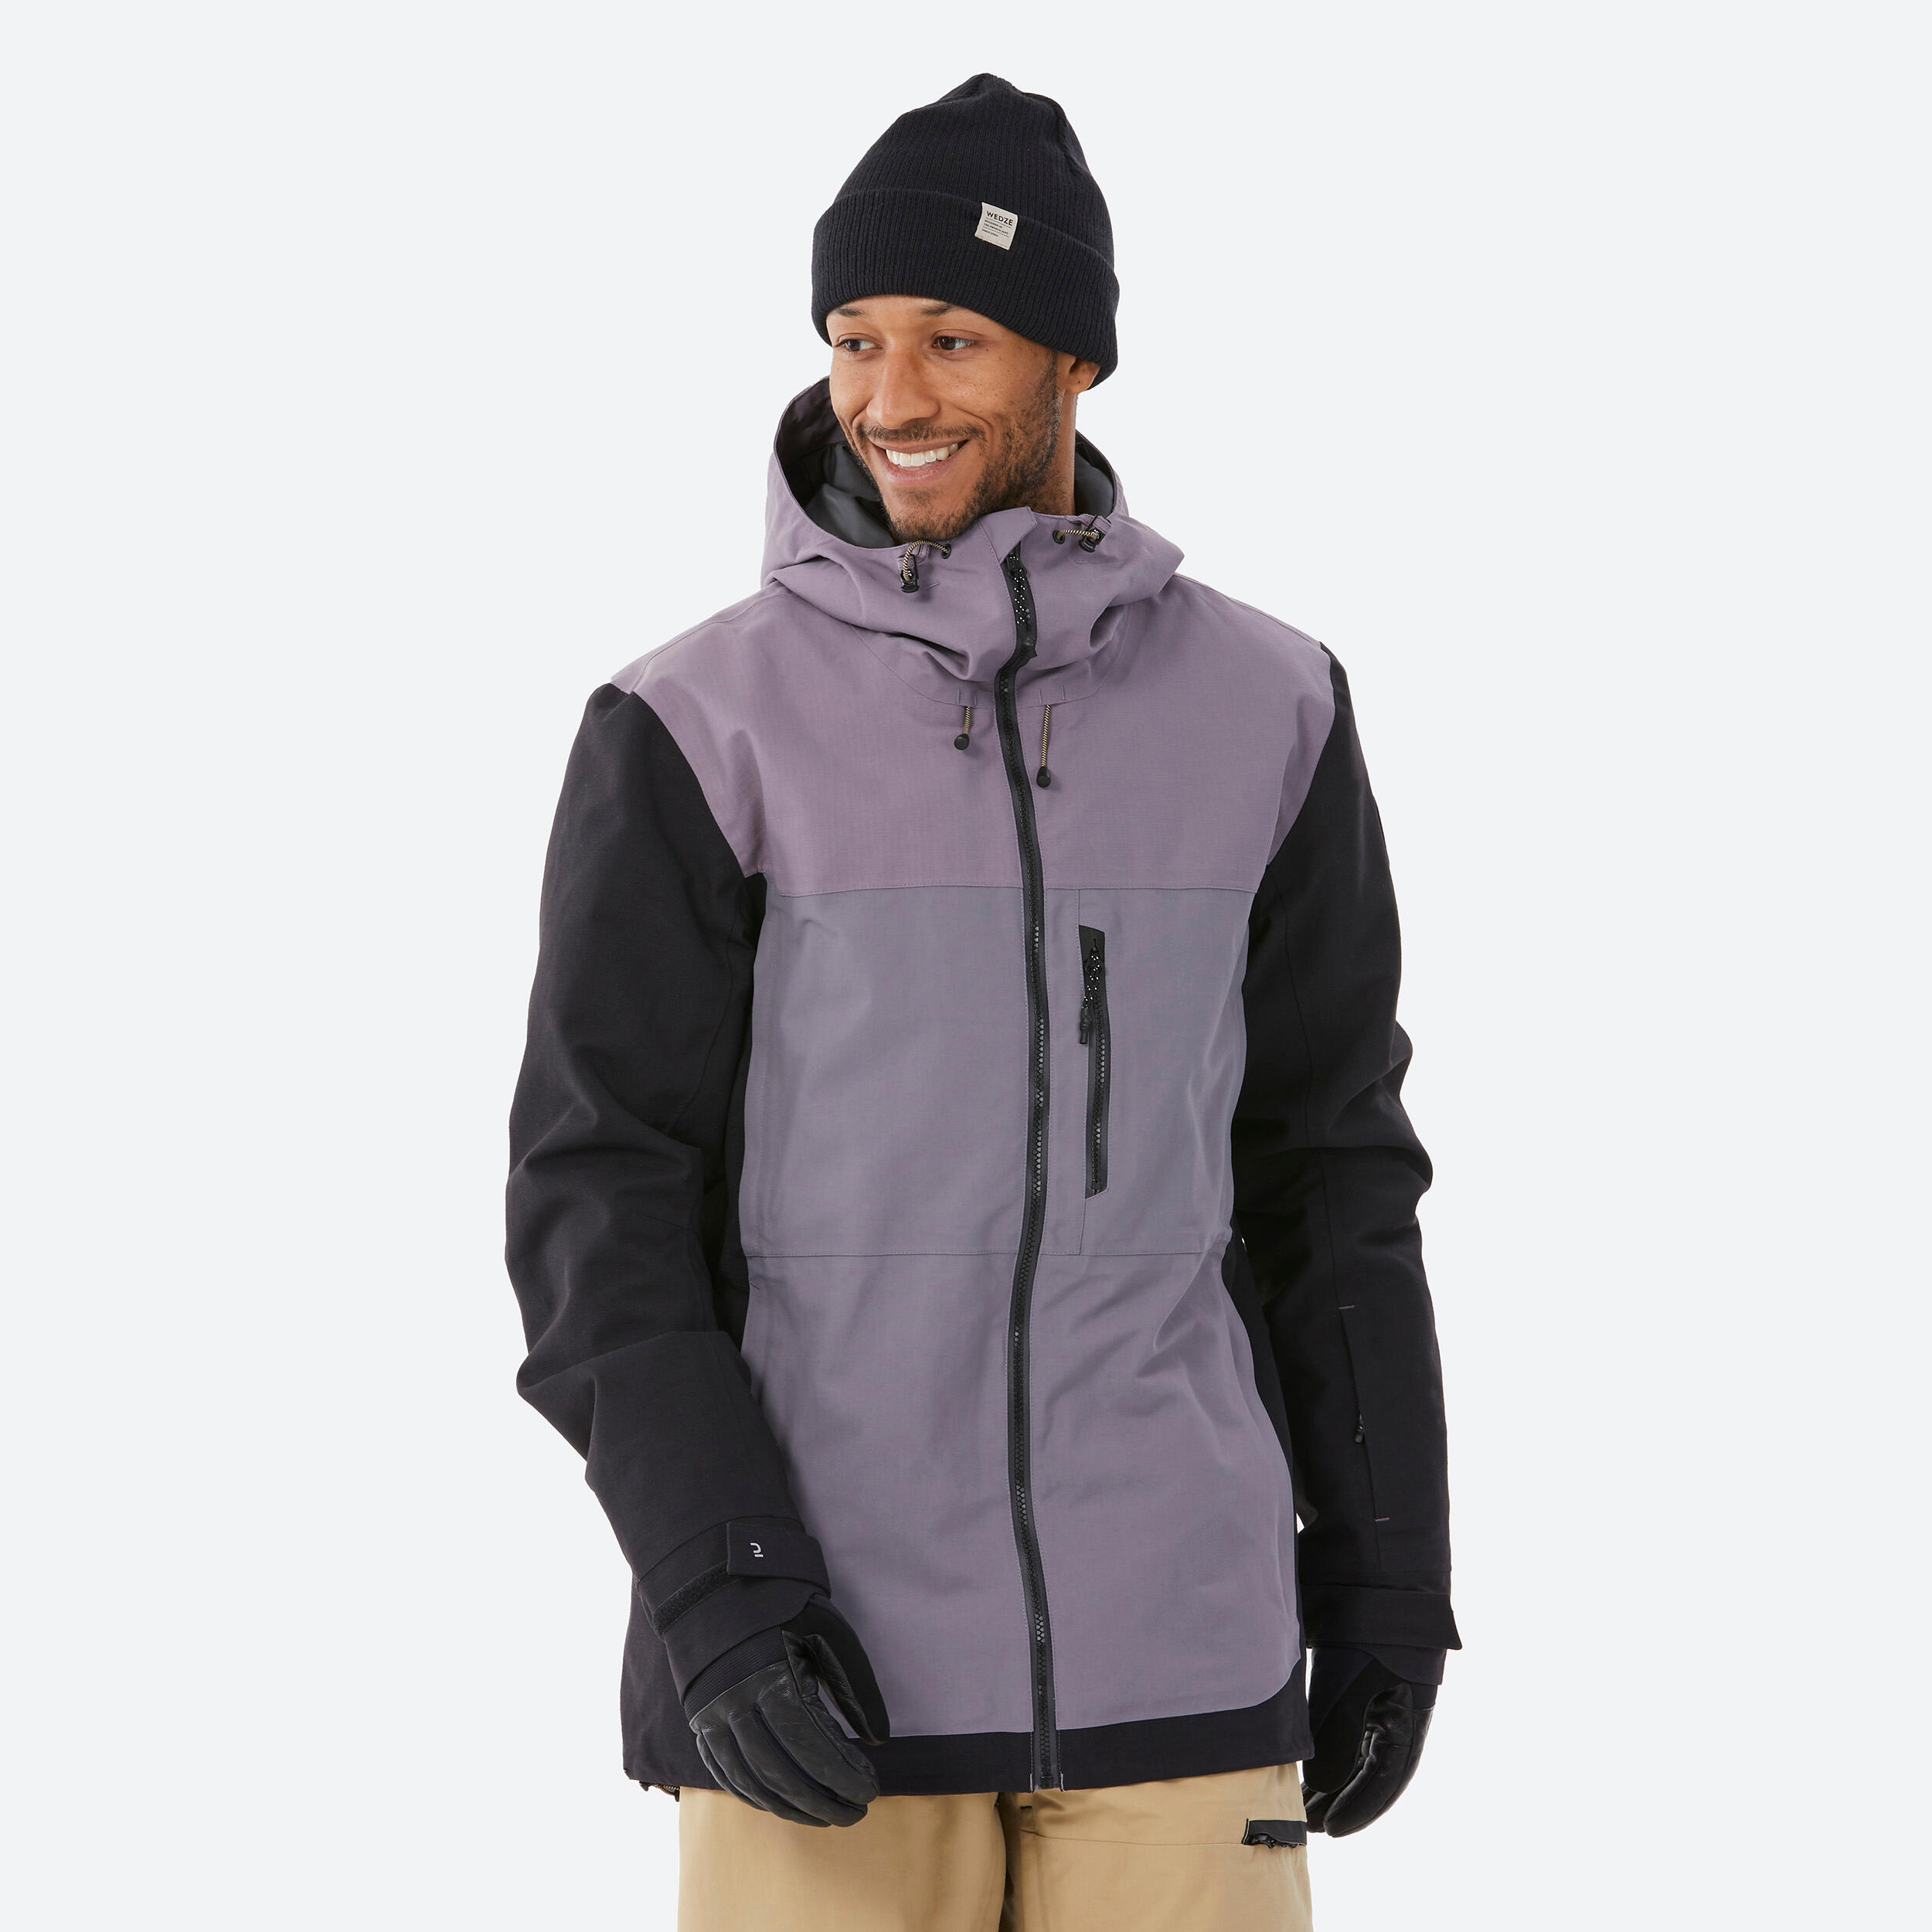 Men's snowboard jacket compatible with ZIPROTEC - SNB 500 - Purple 1/17